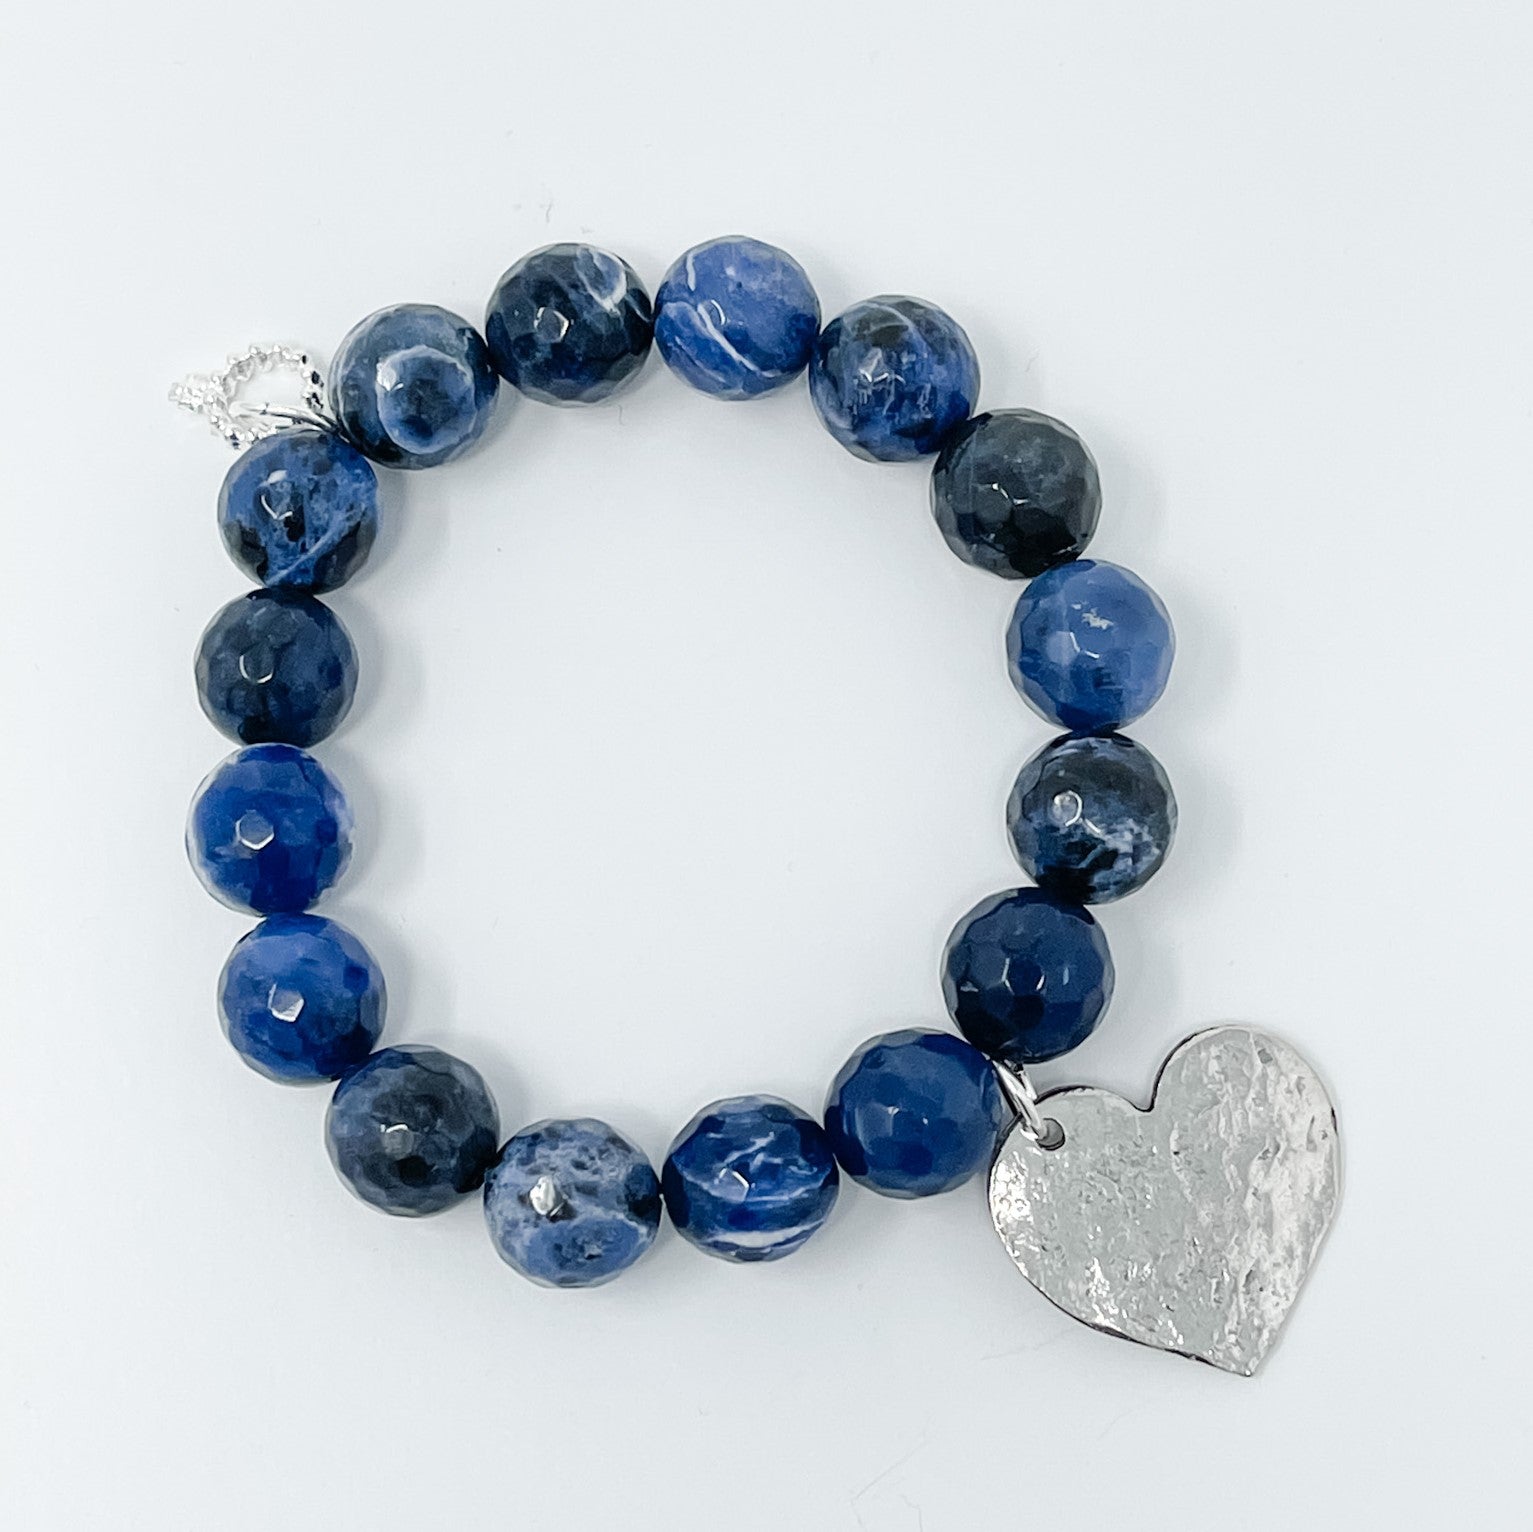 Silver-plated Jens bracelet – buy at Poison Drop online store, SKU 45652.